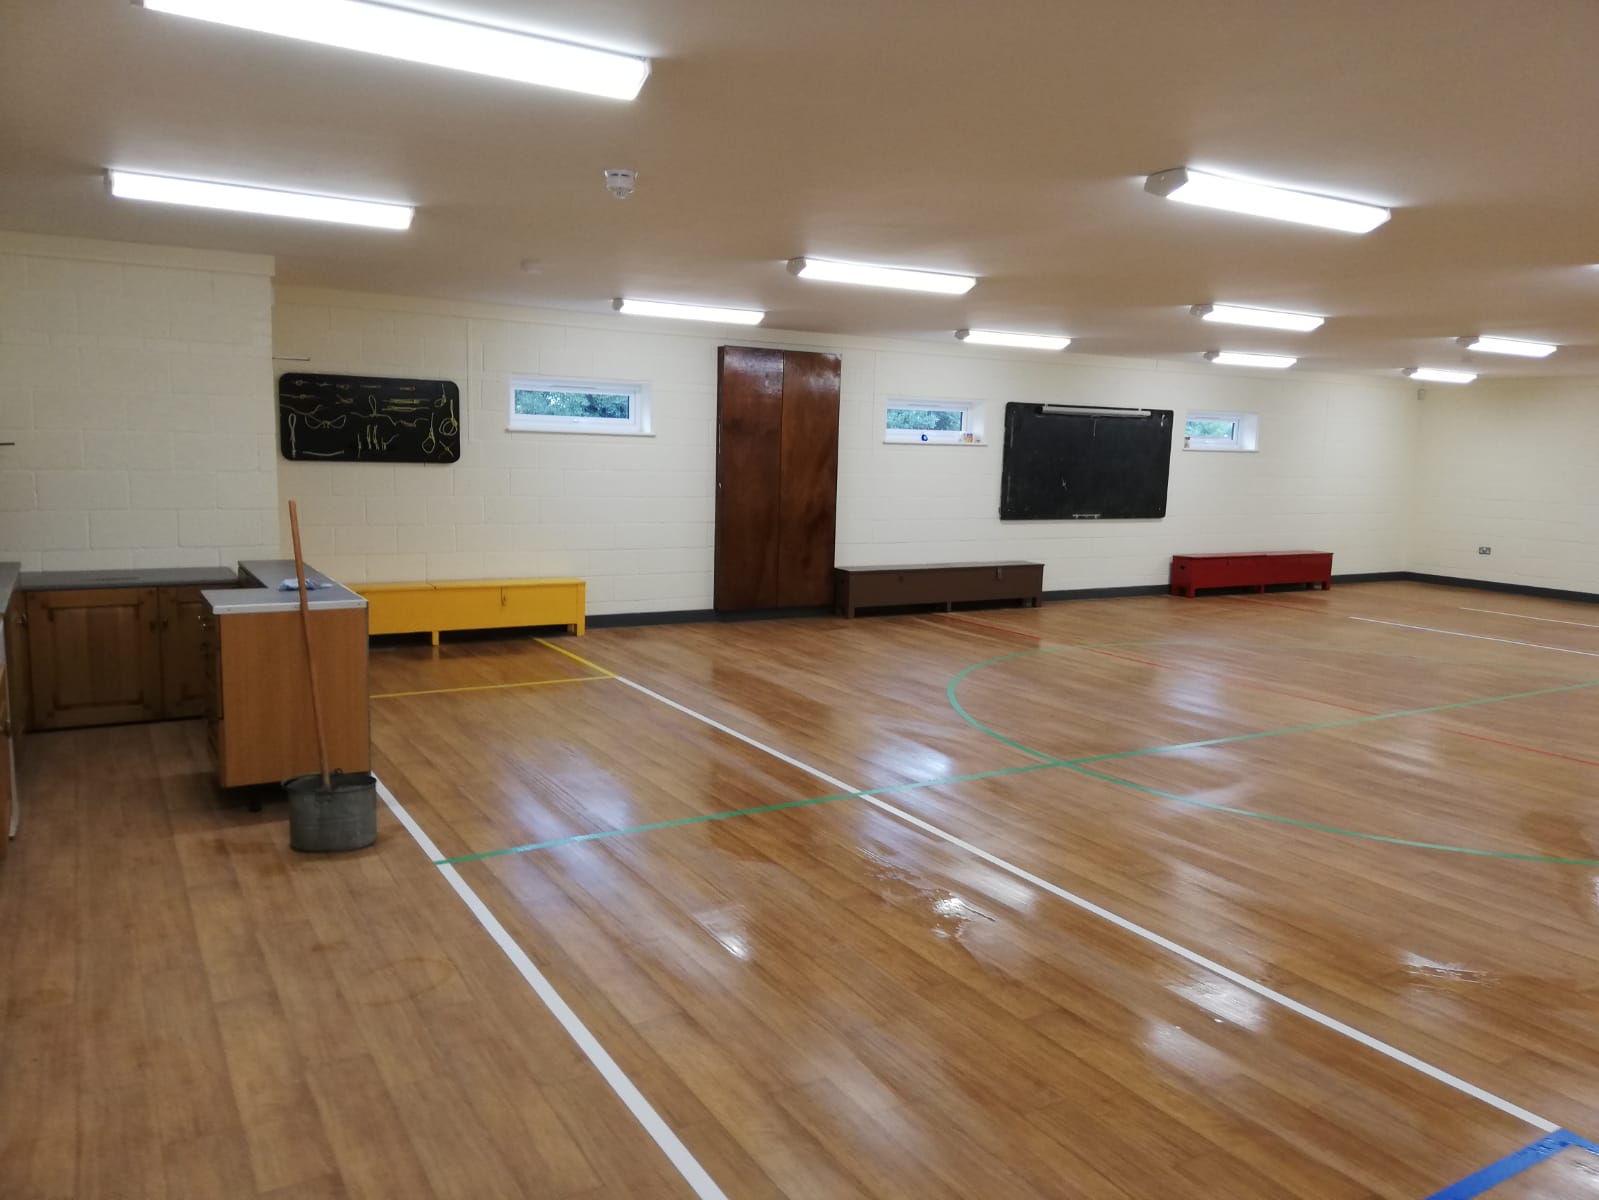 The new hall - Empty